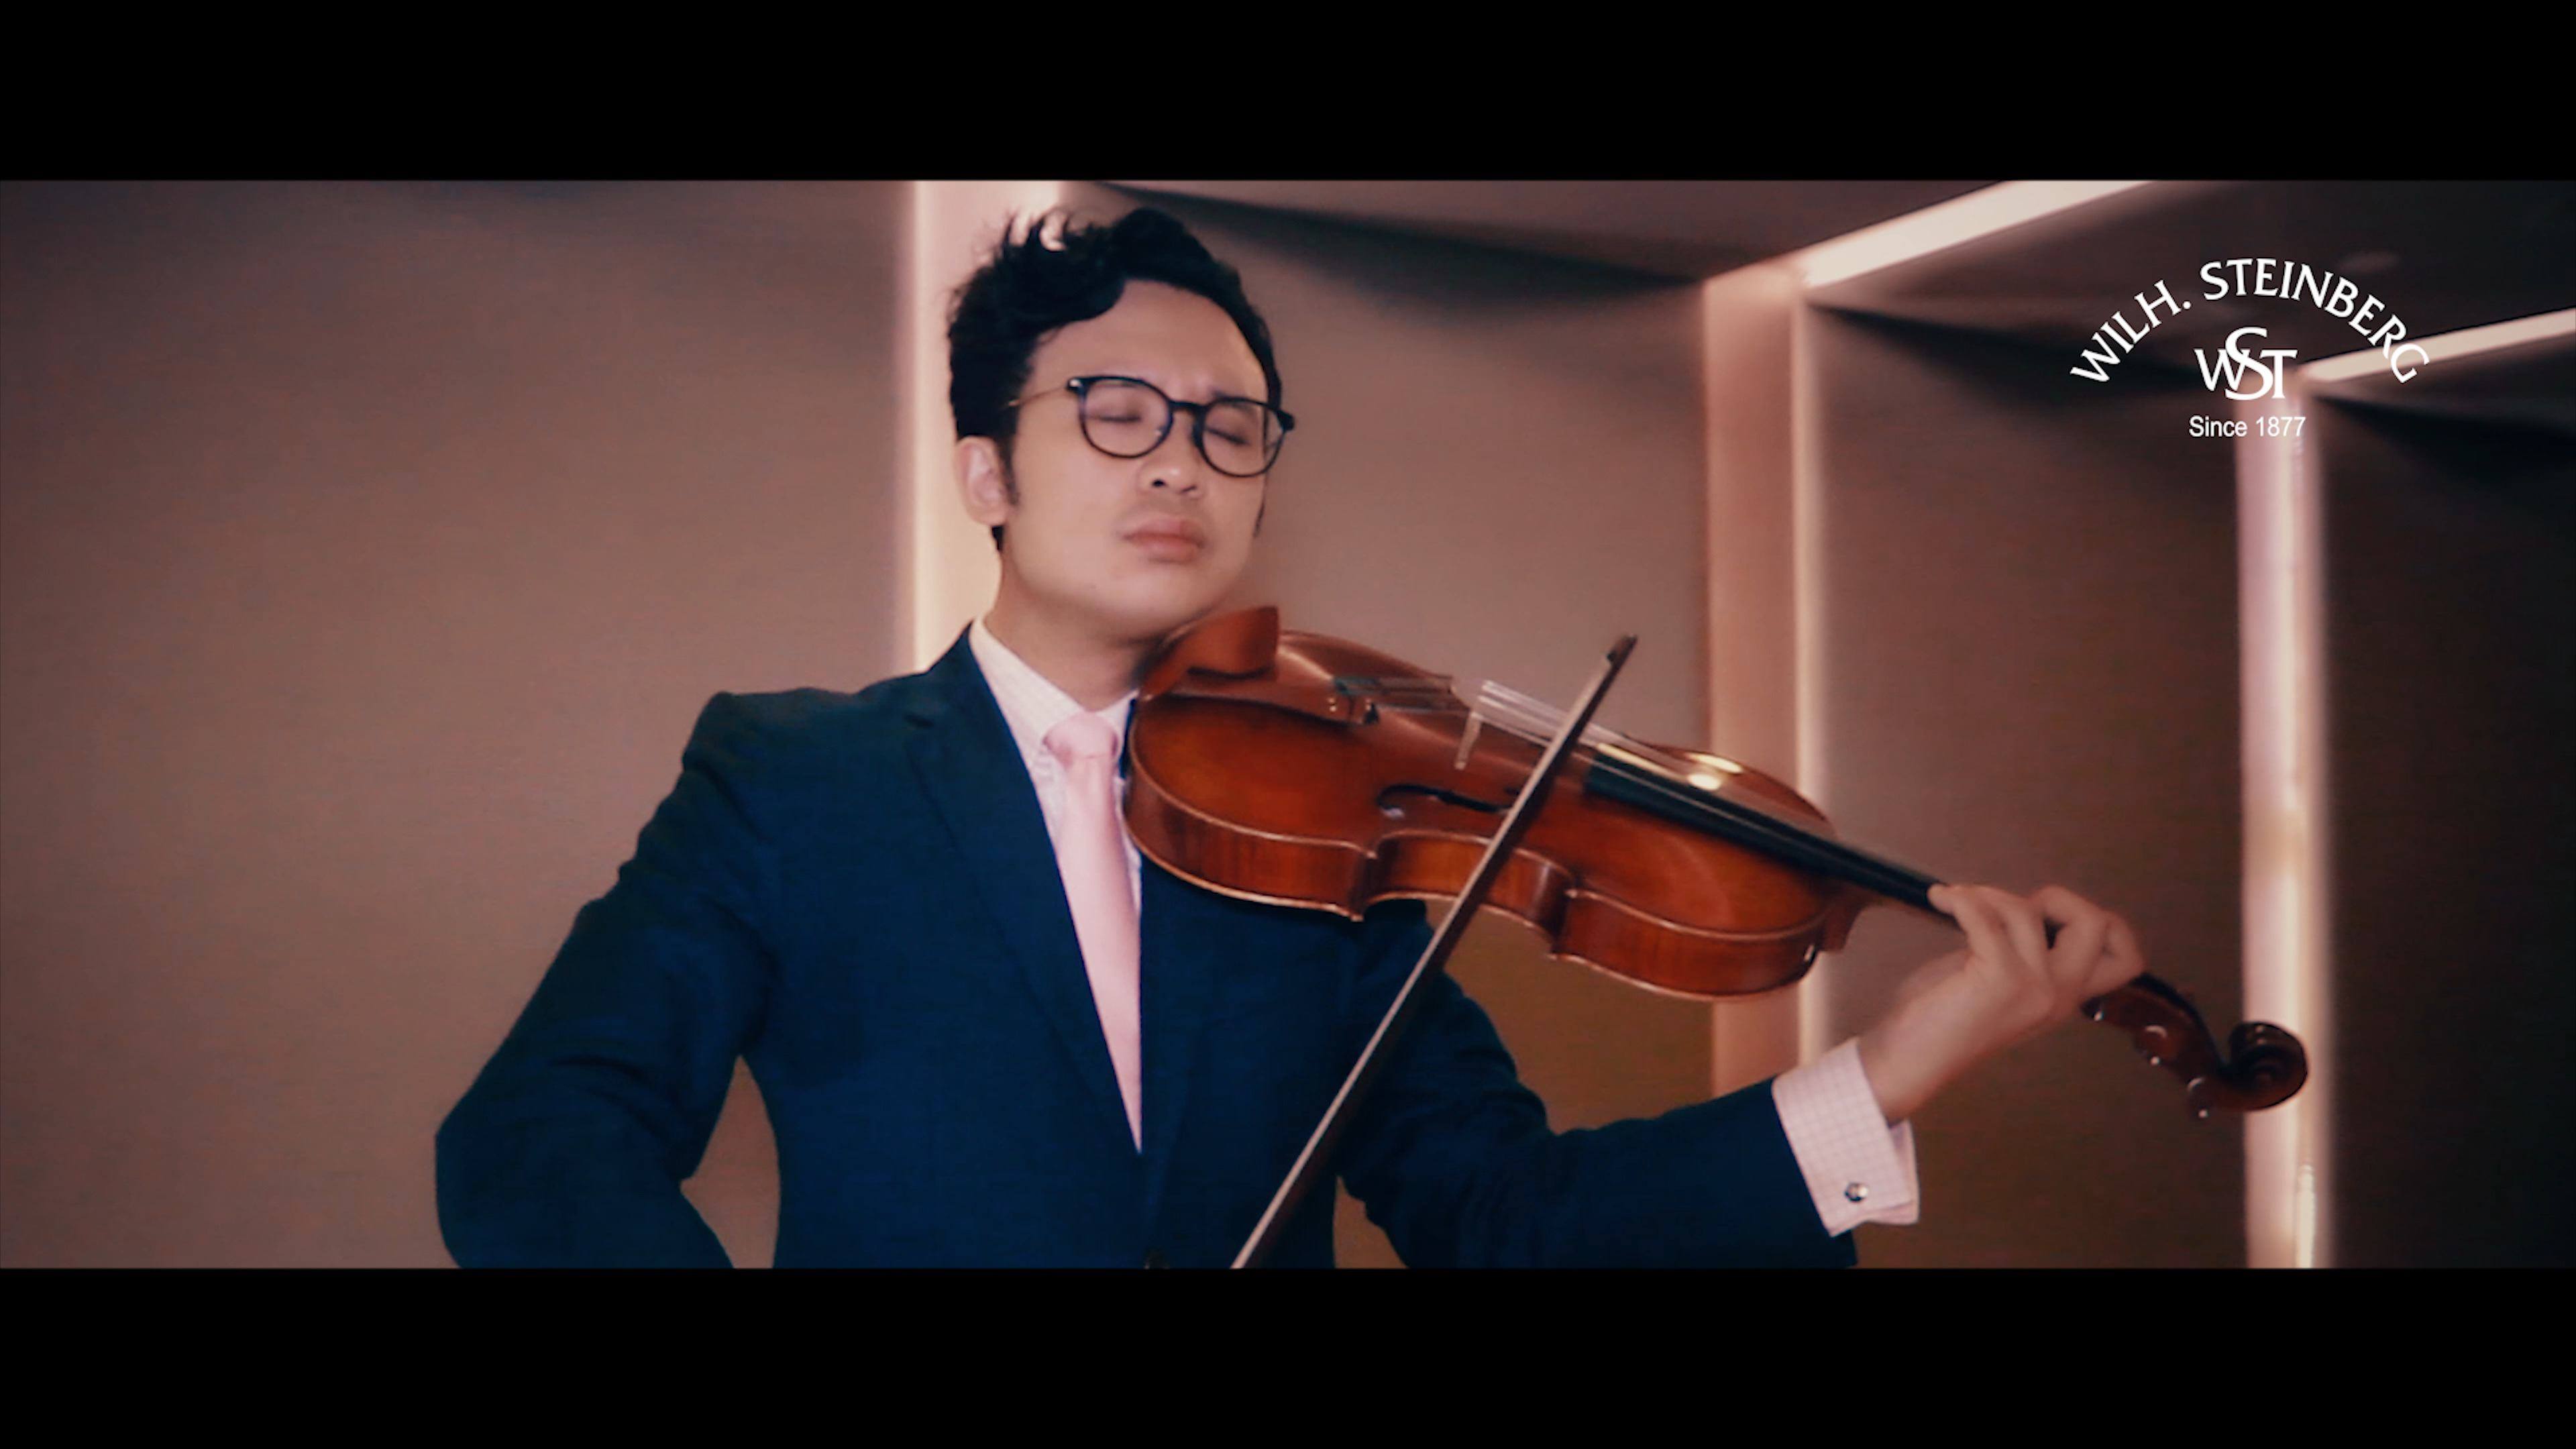 Wilh. Steinberg (WST) 提琴藝術家、香港管弦樂團首席中提琴 Andrew Ling 凌顯祐 早前為 WST 提琴世界 錄影了幾款提琴的示範影片，率先釋出的是高階演奏級中提琴。